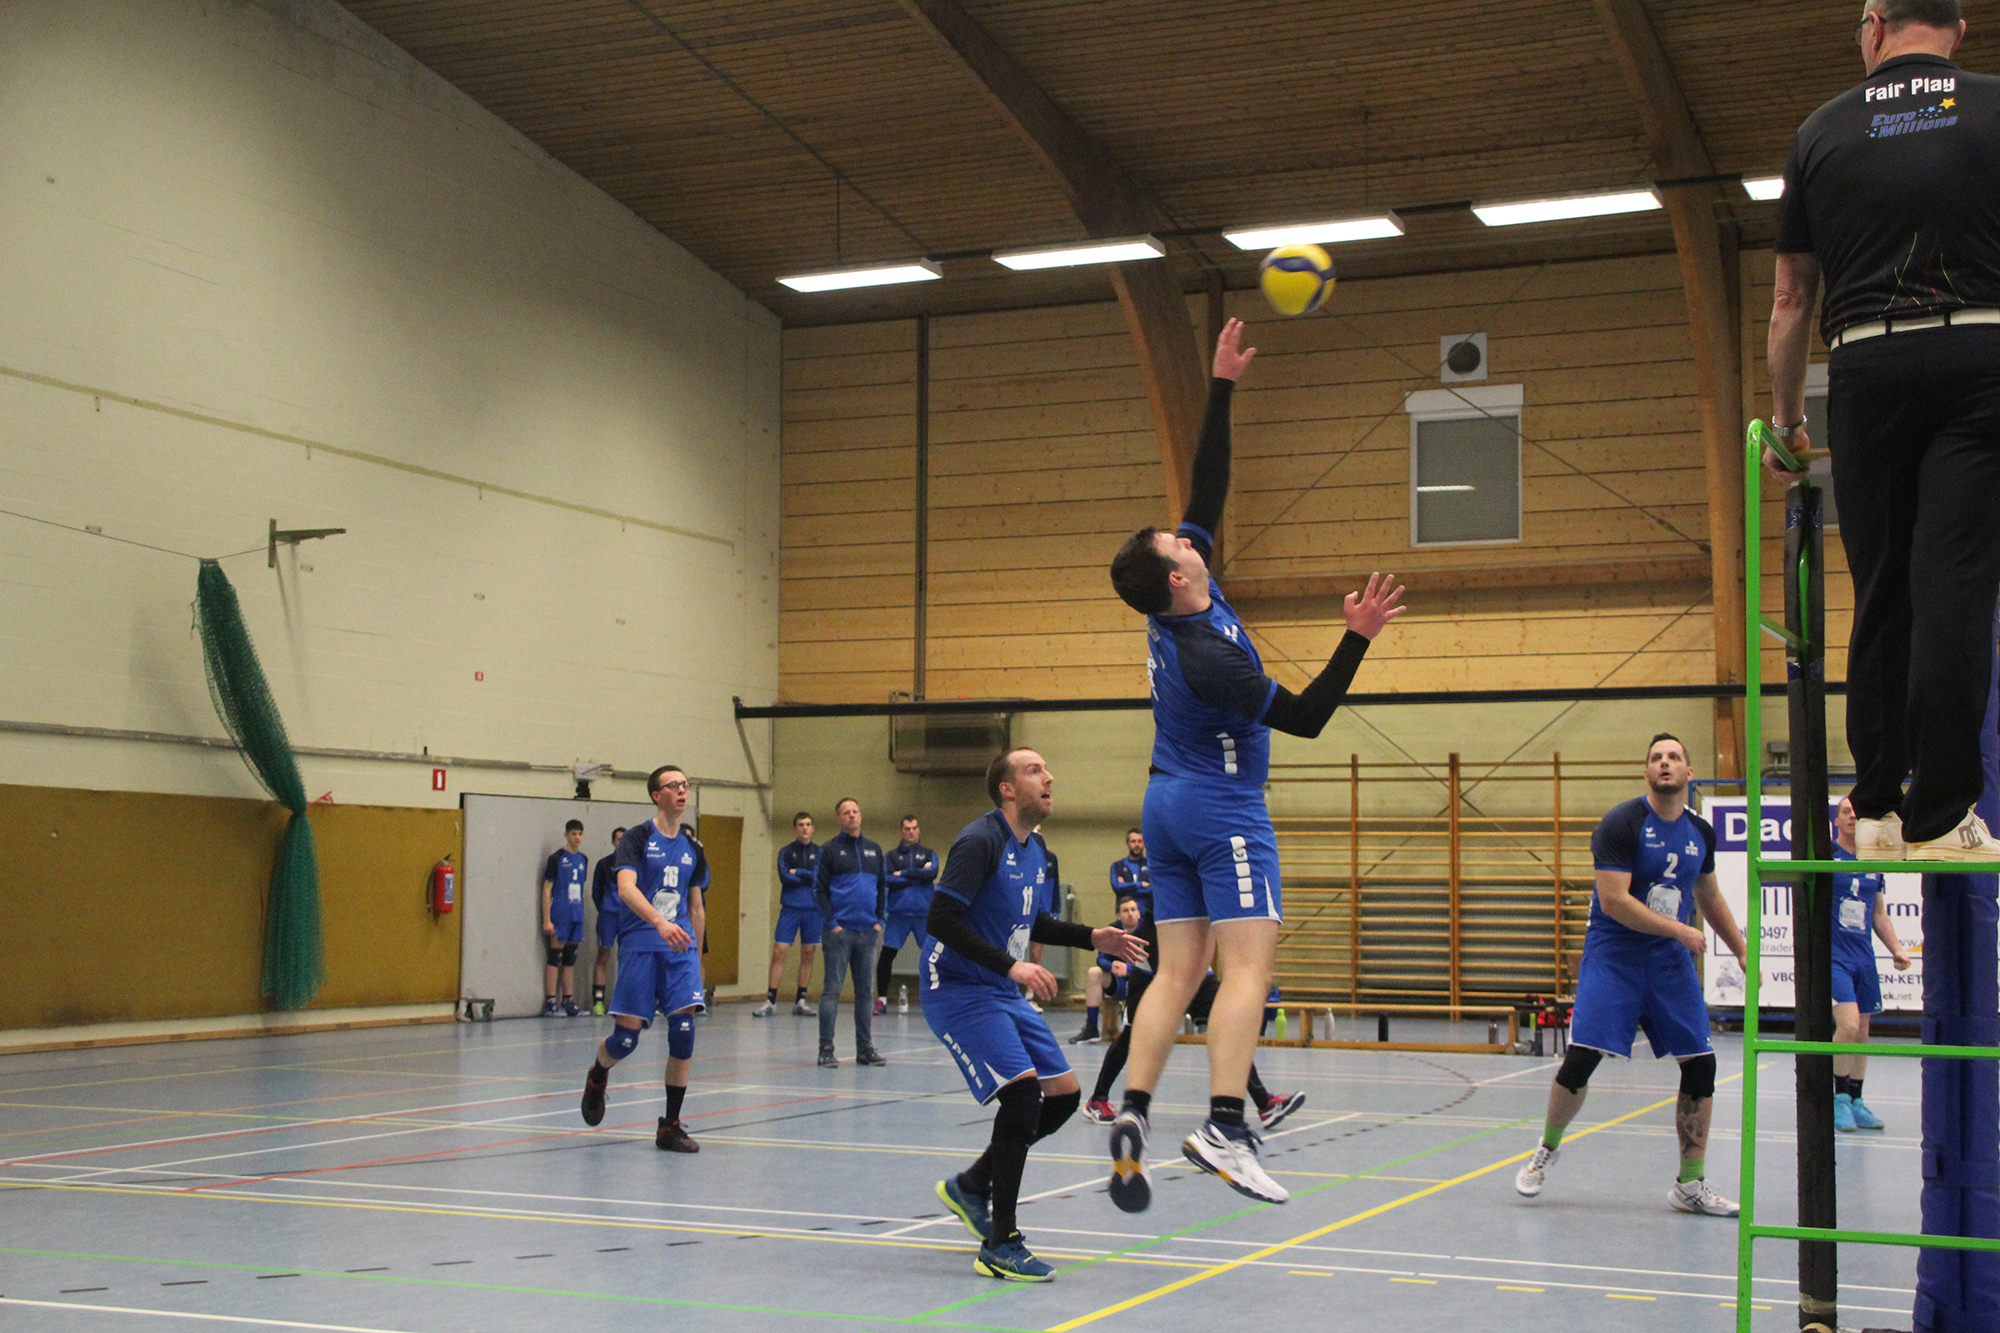 Sporta Eupen-Kettenis konnte gegen Kivola Riemst nicht punkten (Bild: Lindsay Ahn/BRF)